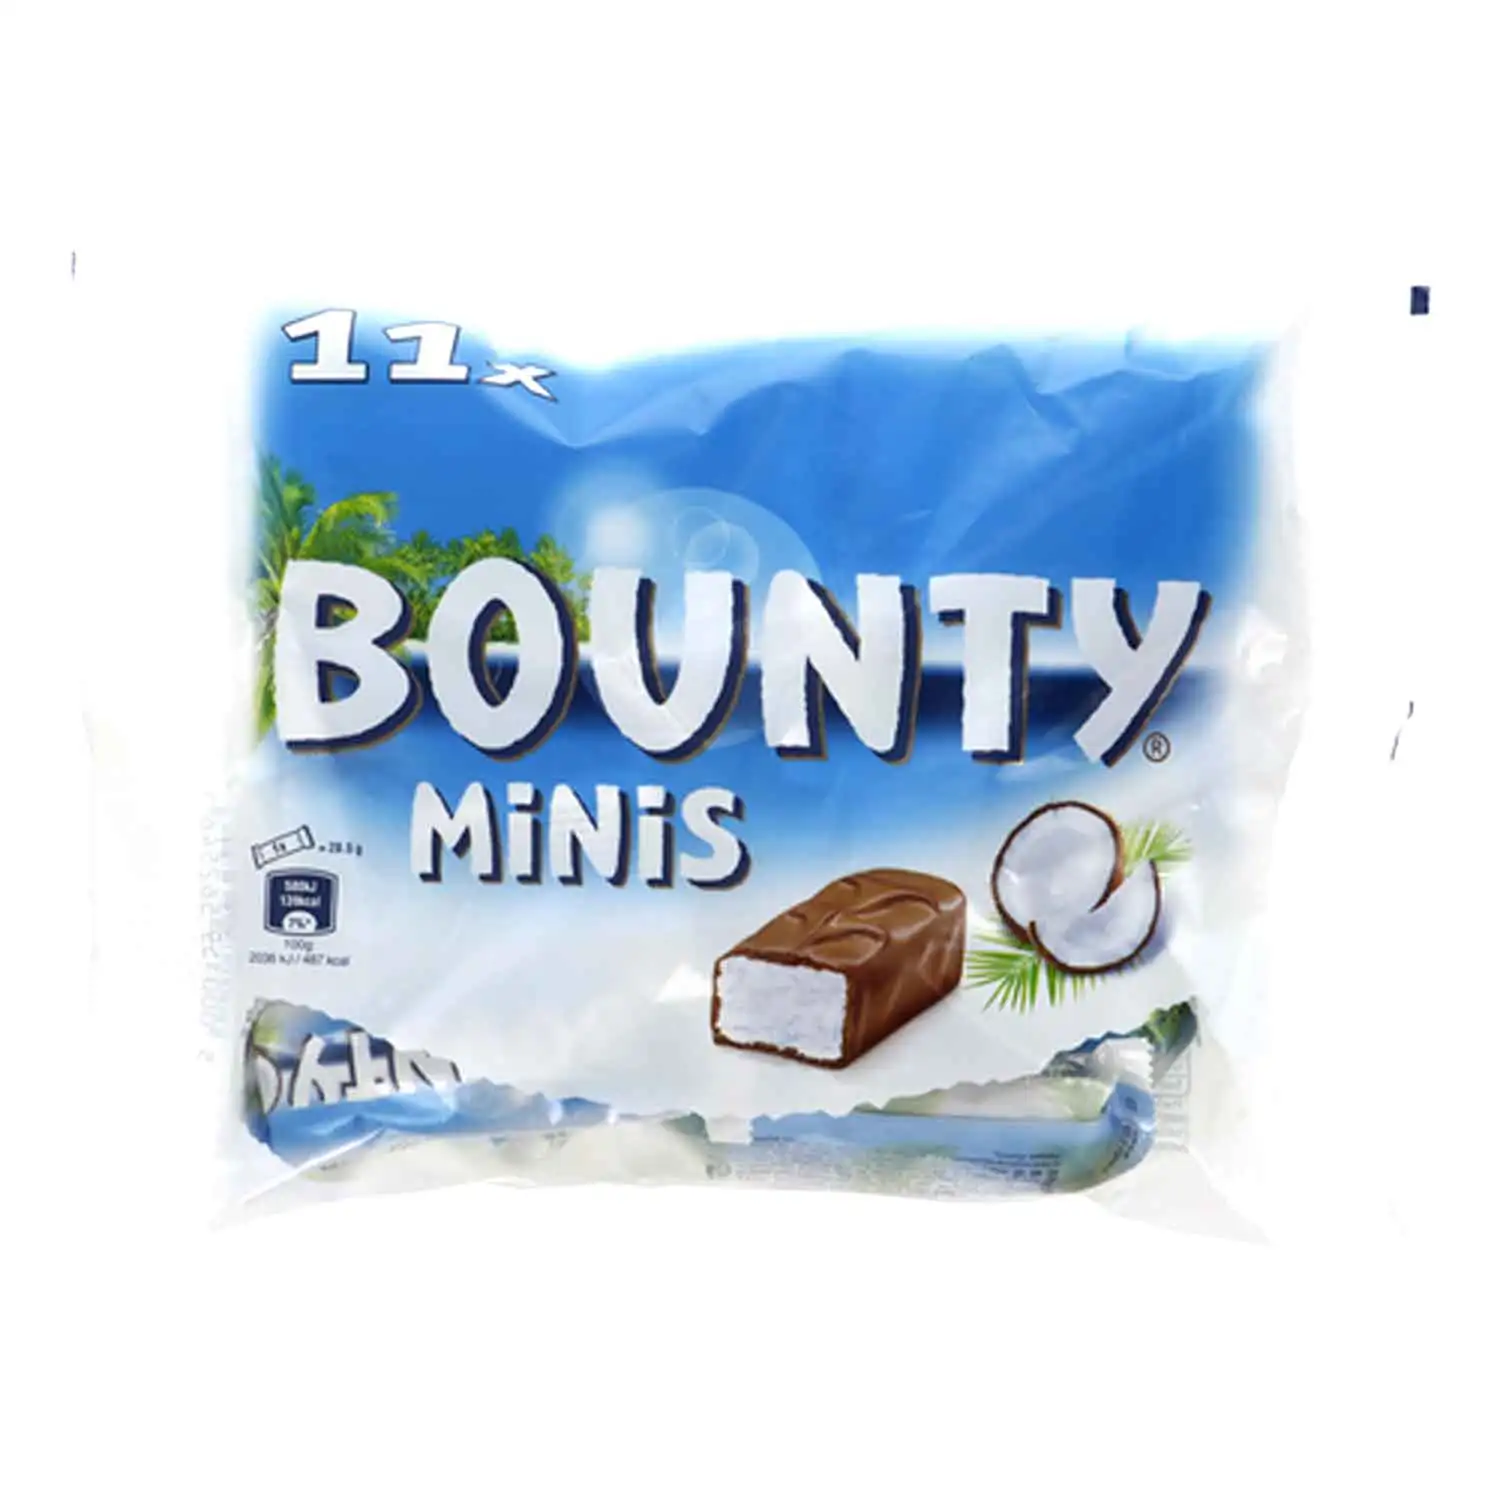 Bounty minis 333g